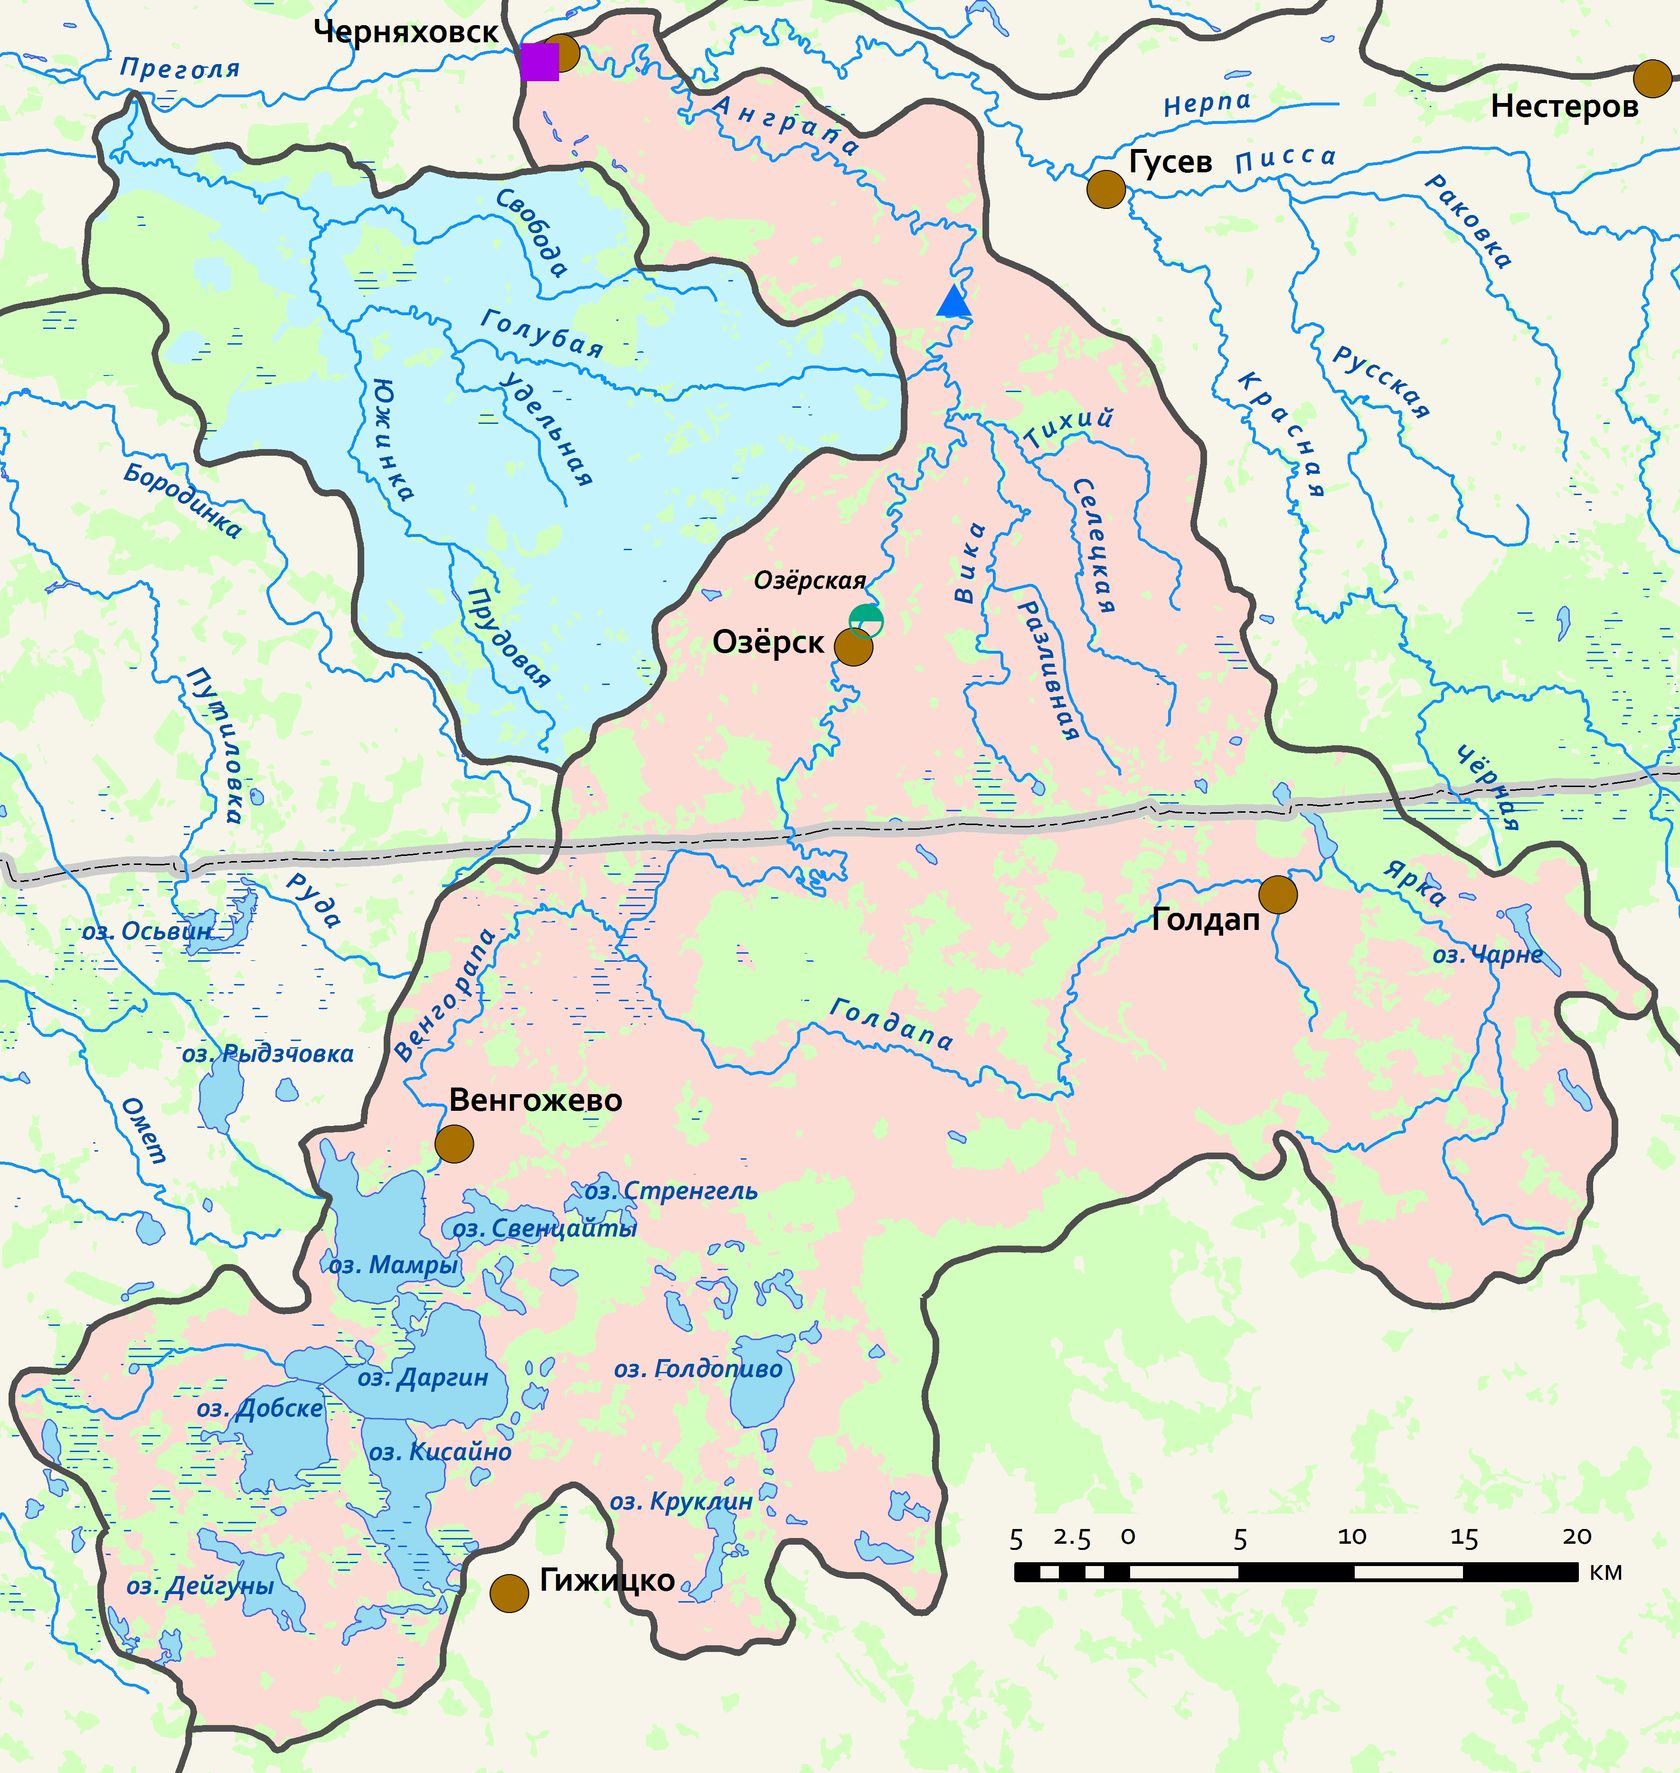 Бассейн реки Преголи